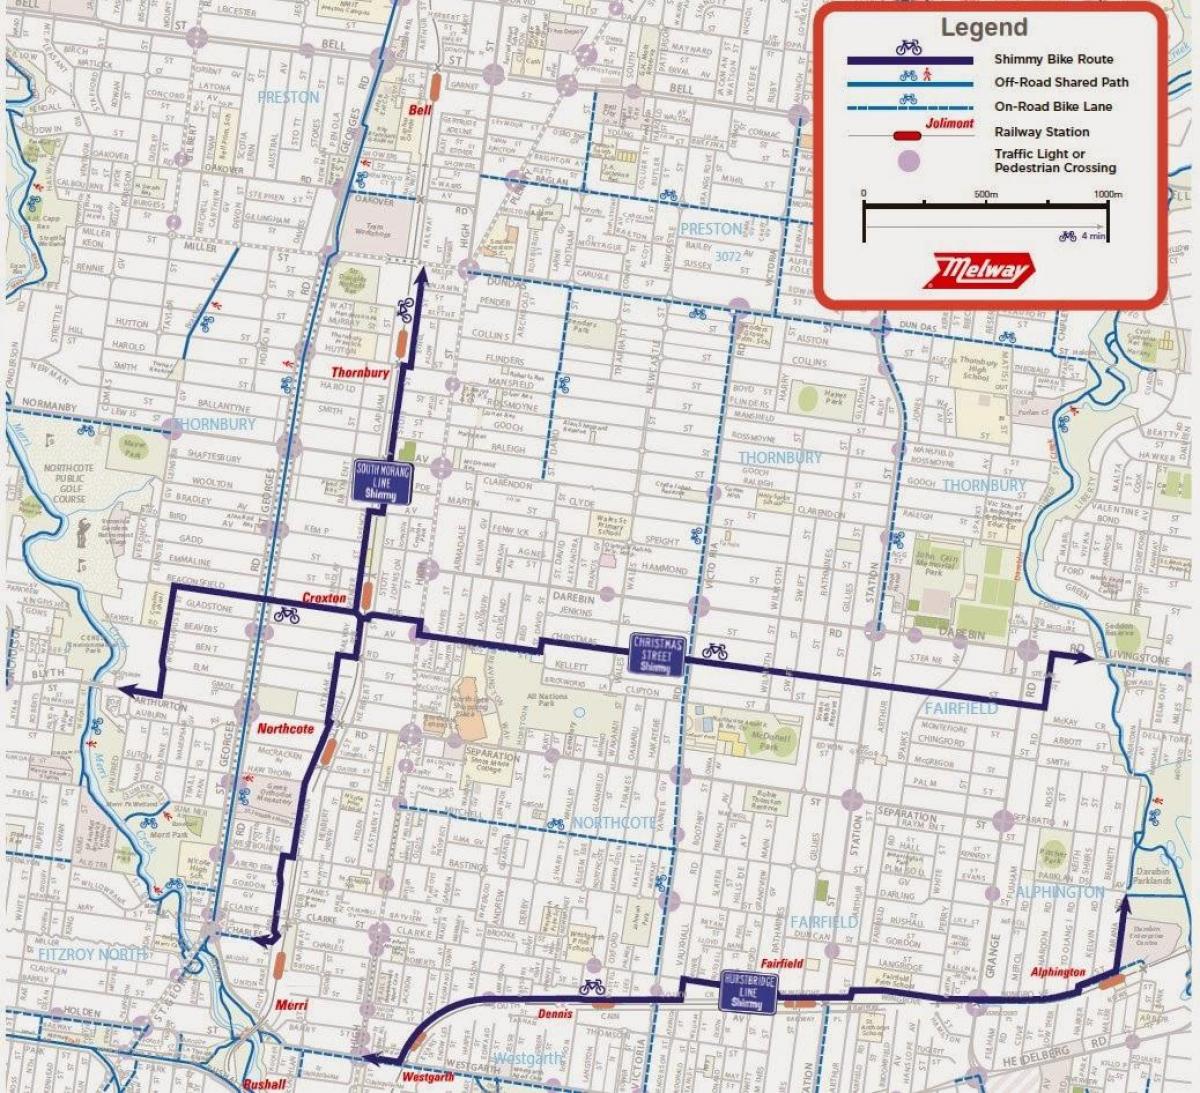 kort over Melbourne bike share